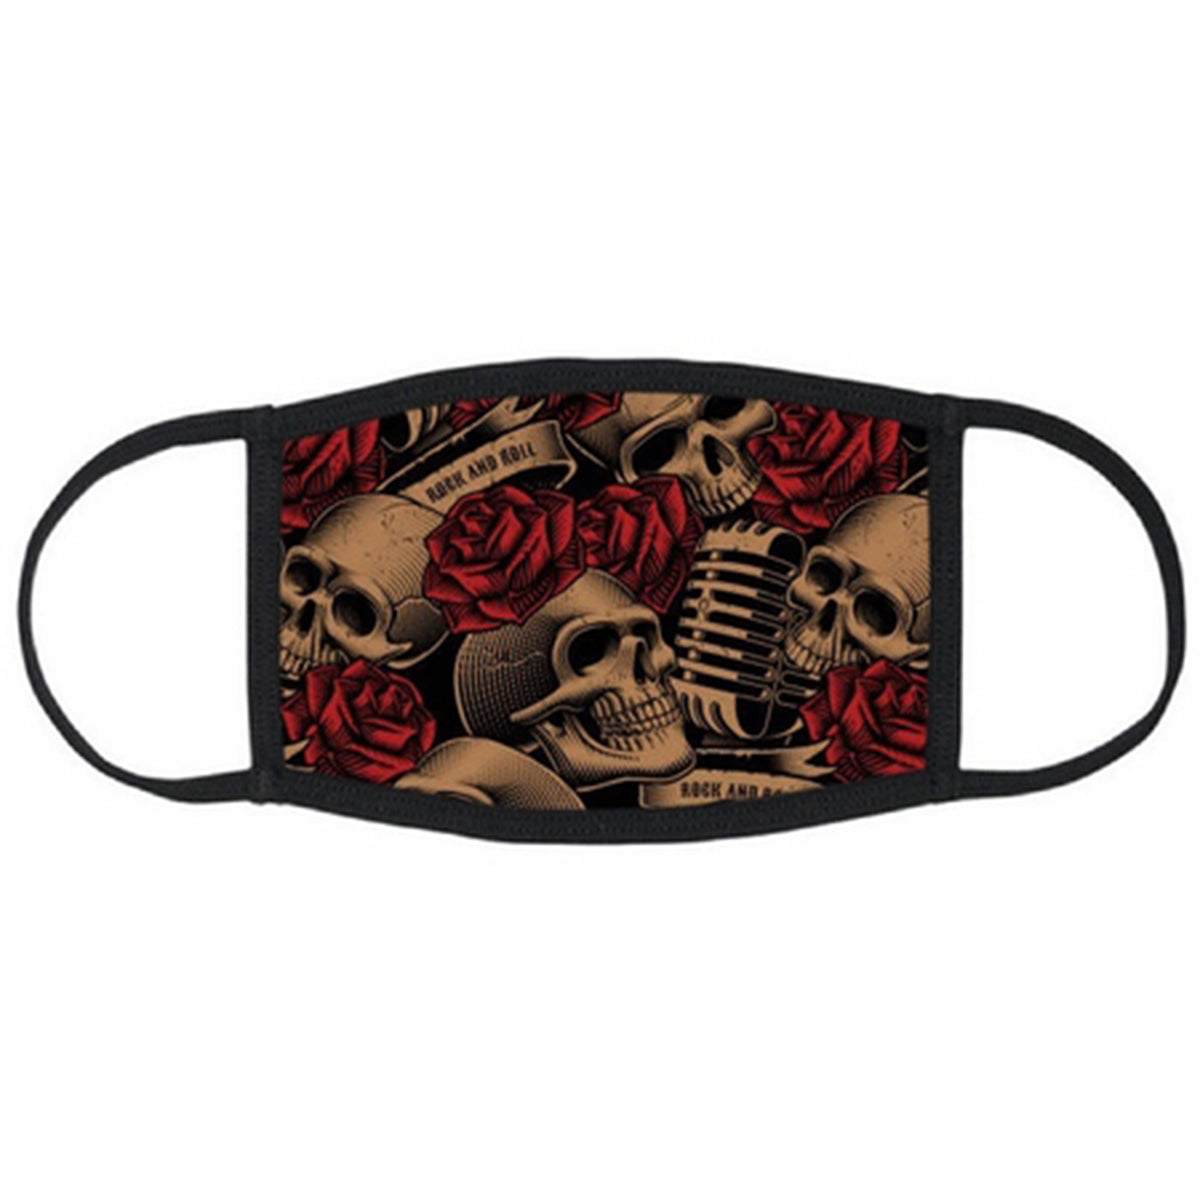 MSk-65 Skull & Roses Washable Face Mask with inner pocket for filter